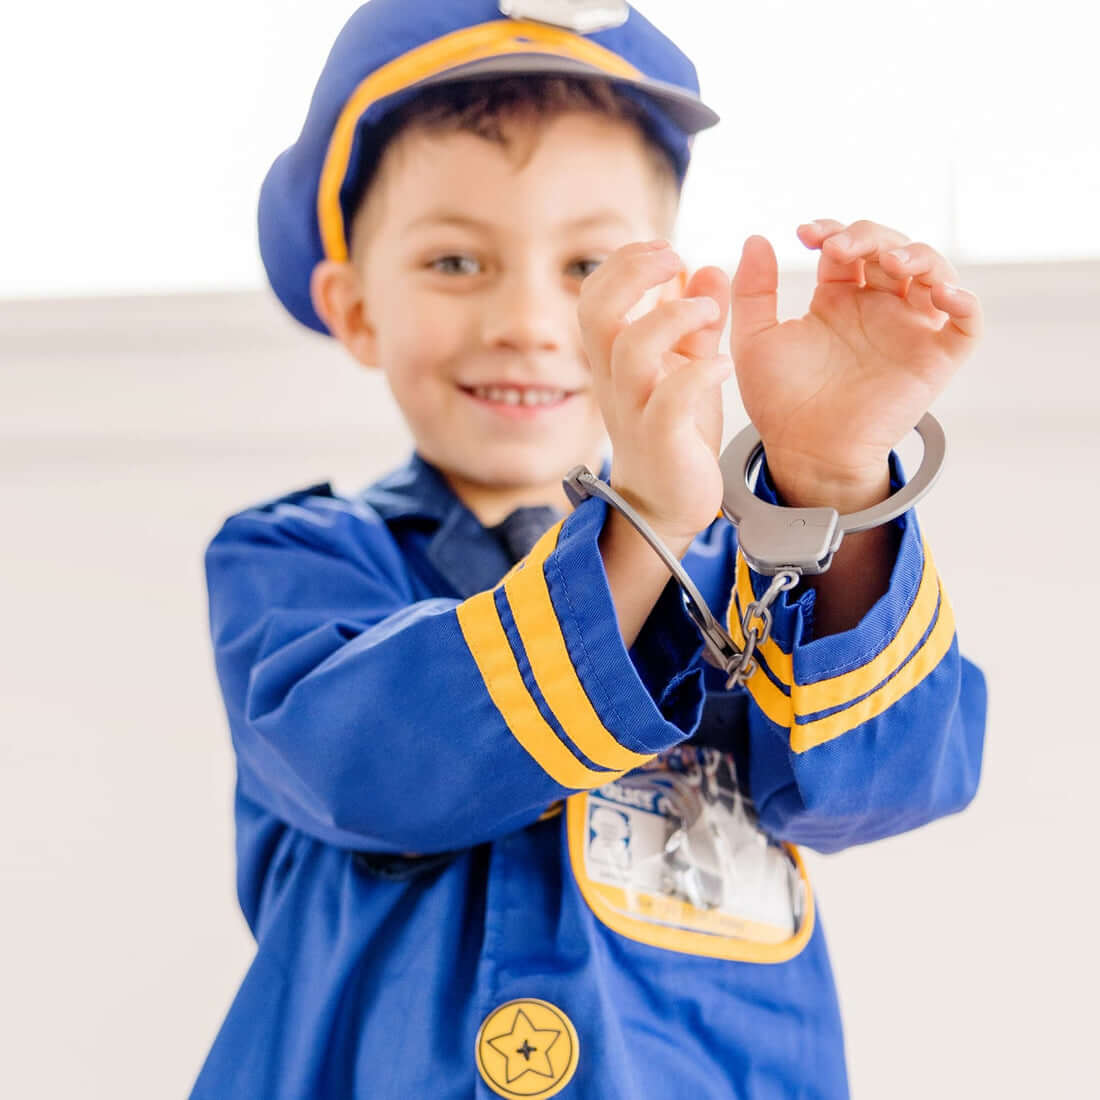 Costume de police enfant garçon